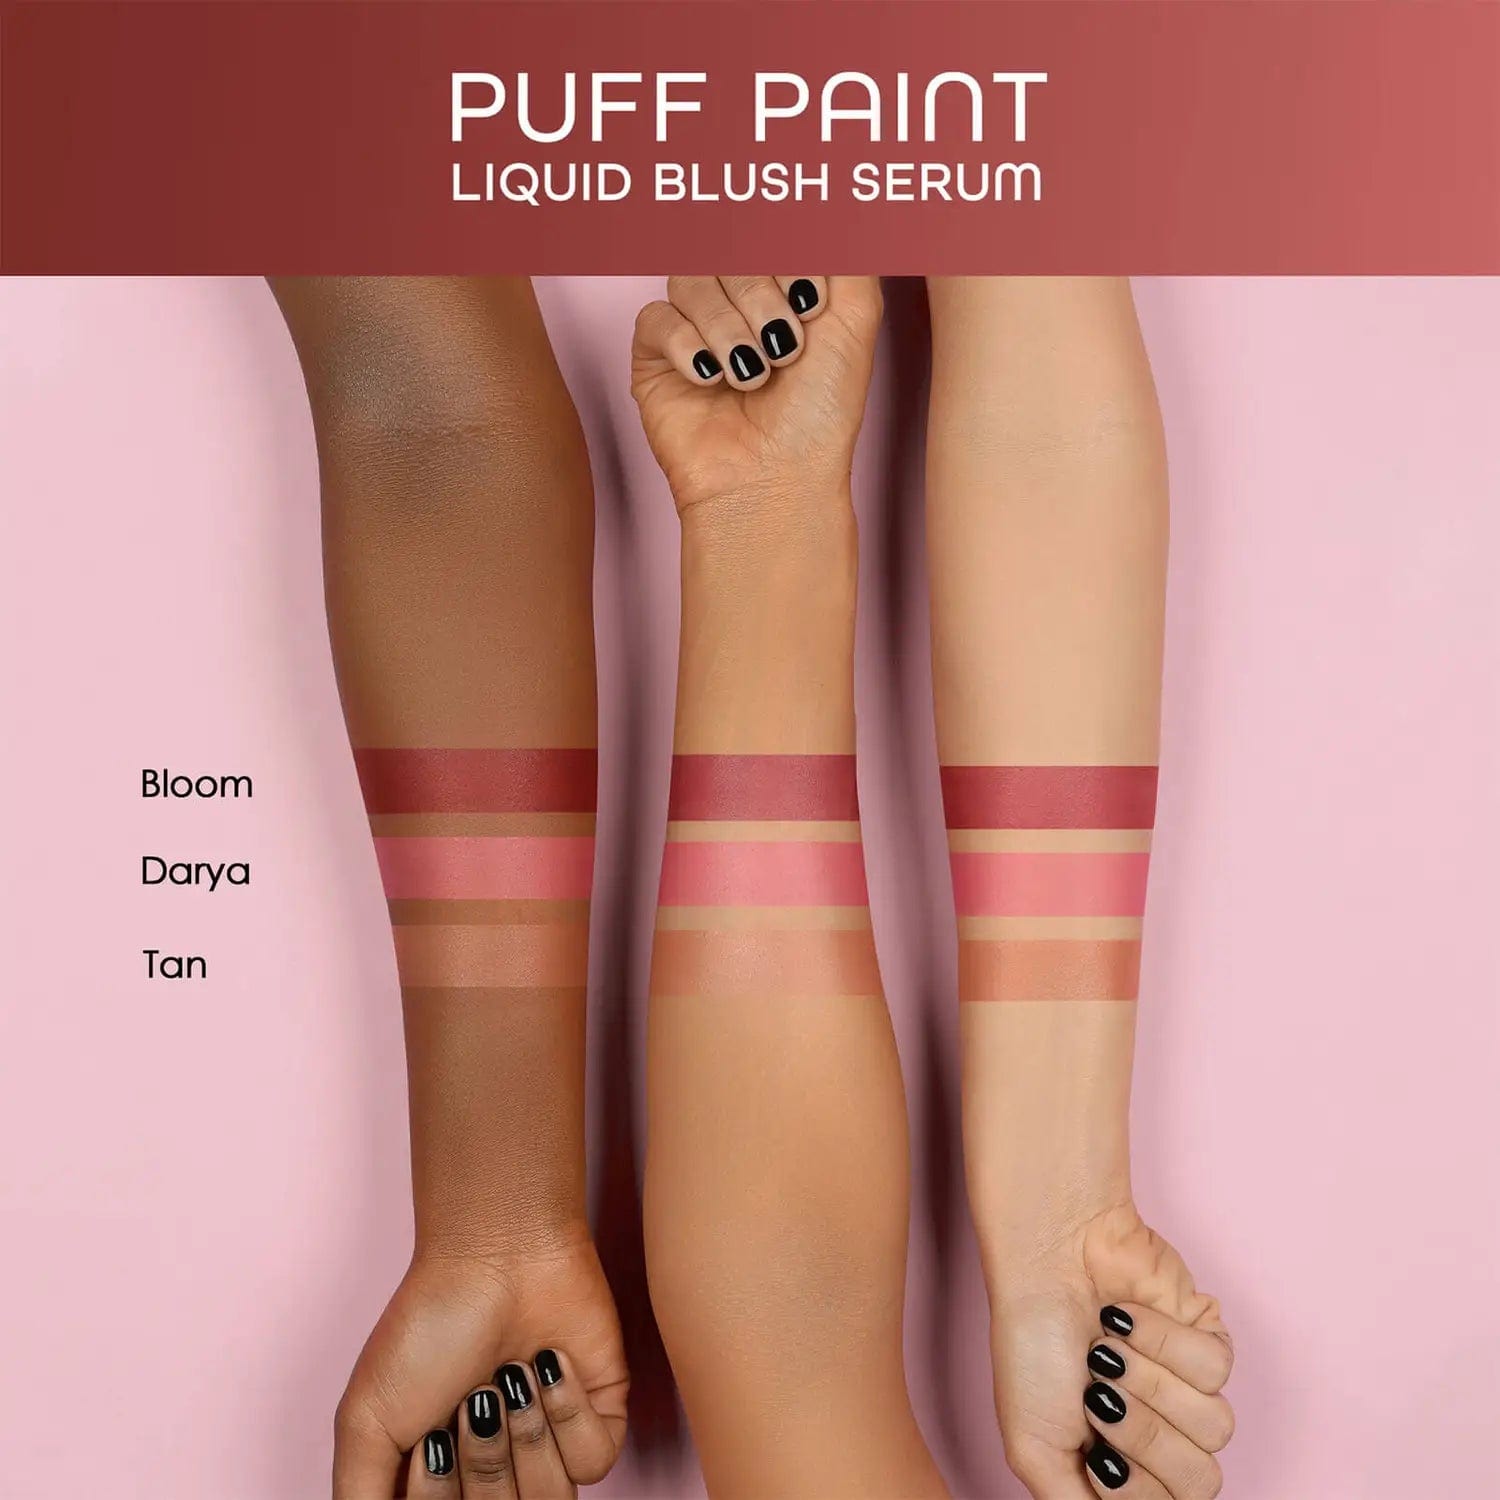 Buy Original Natasha Denona Puff Paint Liquid Blush Serum Tan - Online at Best Price in Pakistan